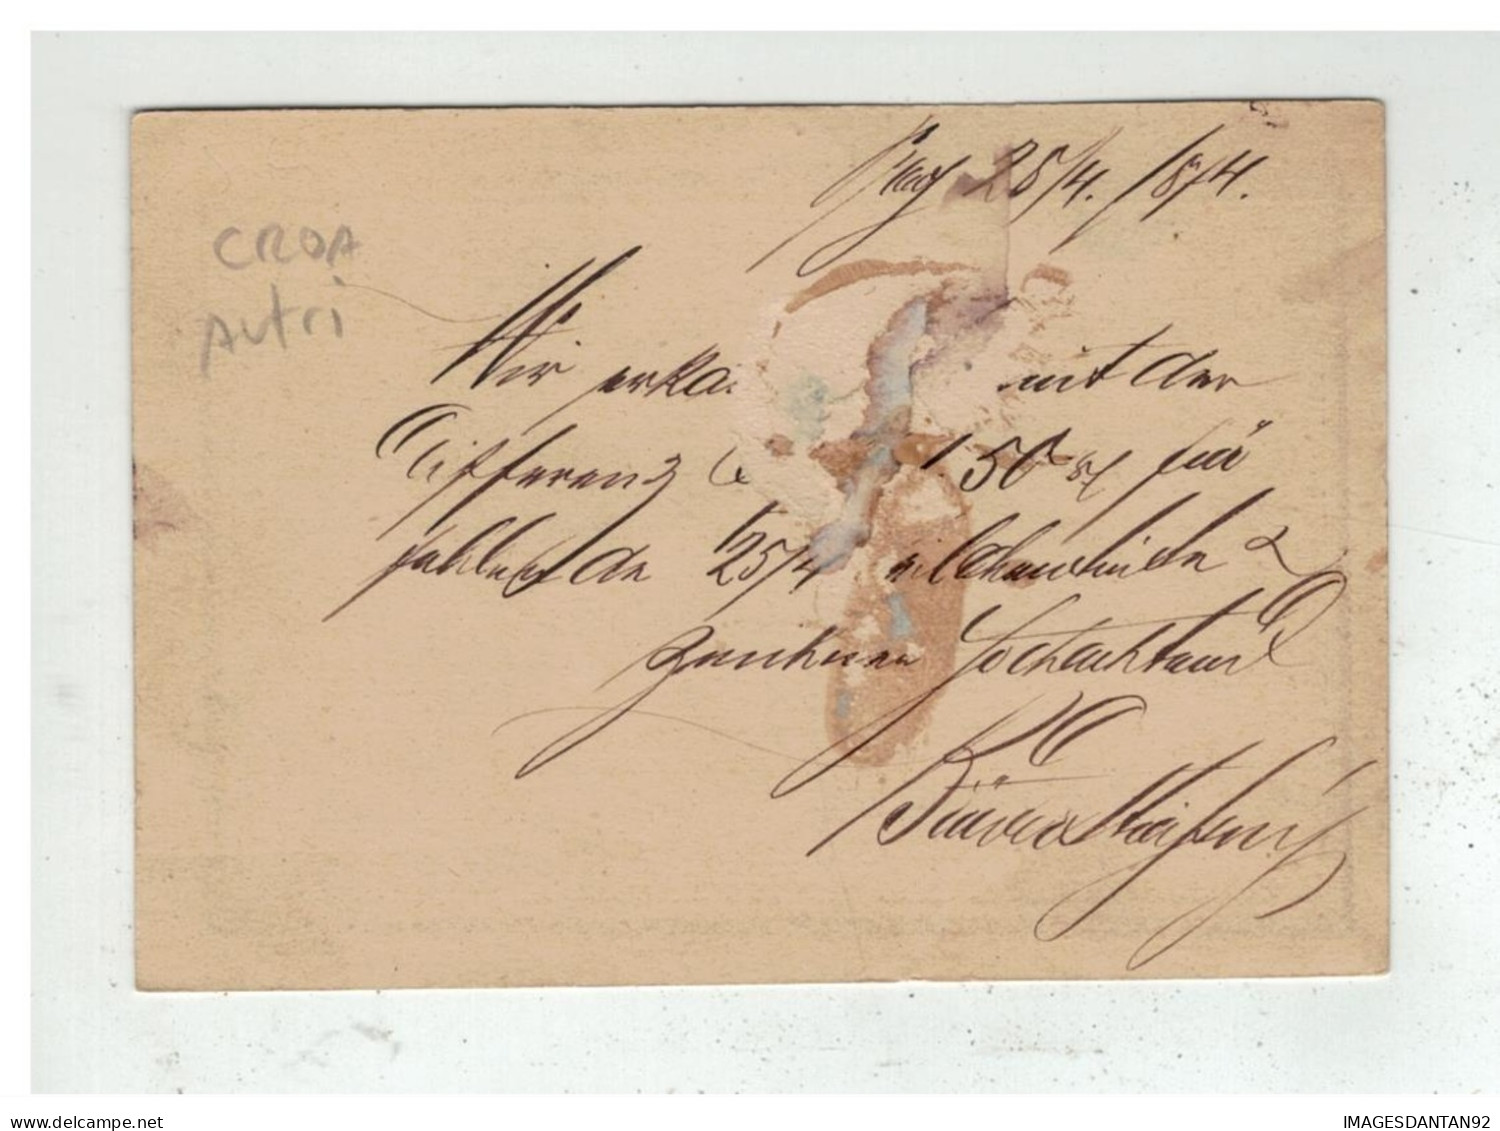 Autriche - Entier Postal 2 Kreuser De PRAG BAHNHOF à Destination De KARLSTADT KARLOVAC CROATIA 1874 - Ganzsachen